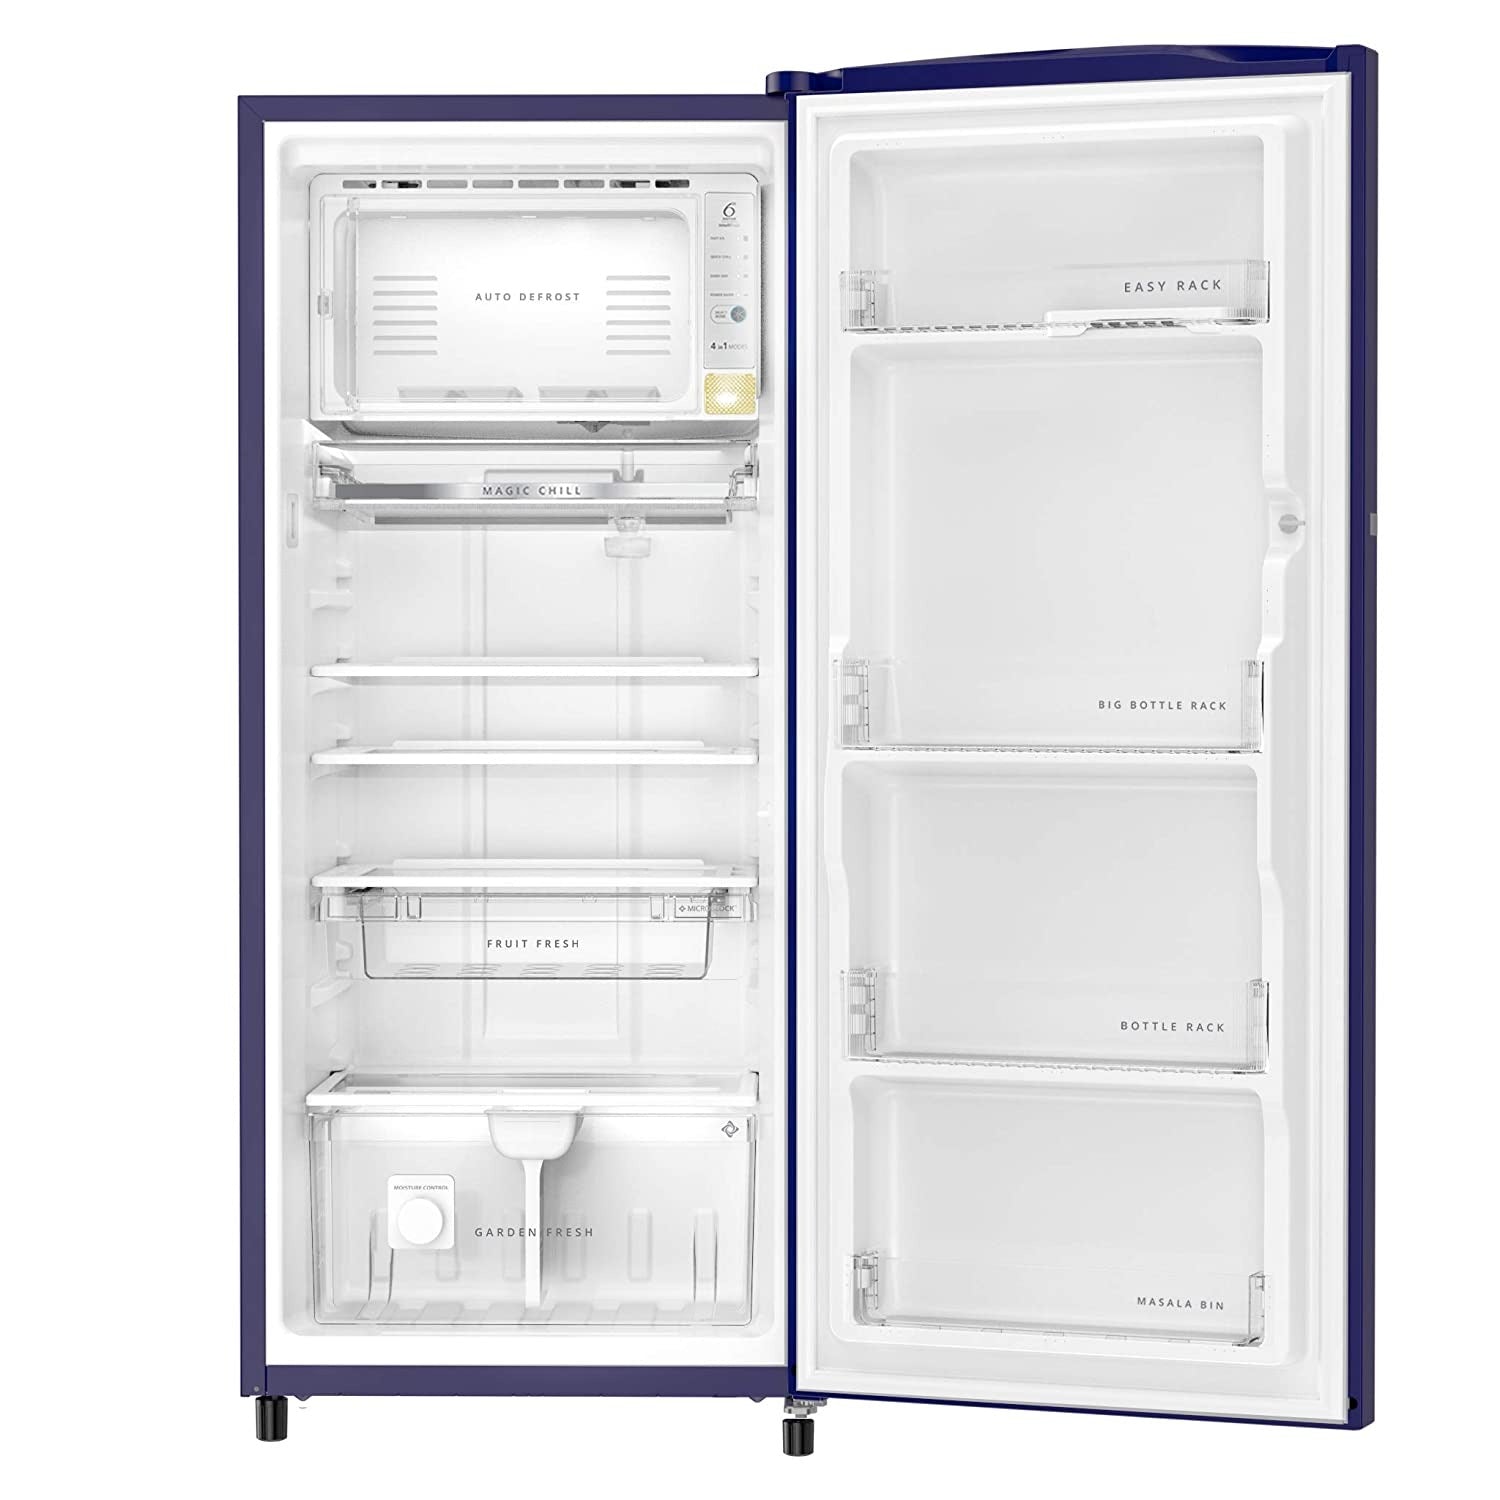 Open Box, Unused Whirlpool 245 L  Direct-Cool Single Door Refrigerator 260 IMPRO PLUS PRM 4S INV Sapphire Flume